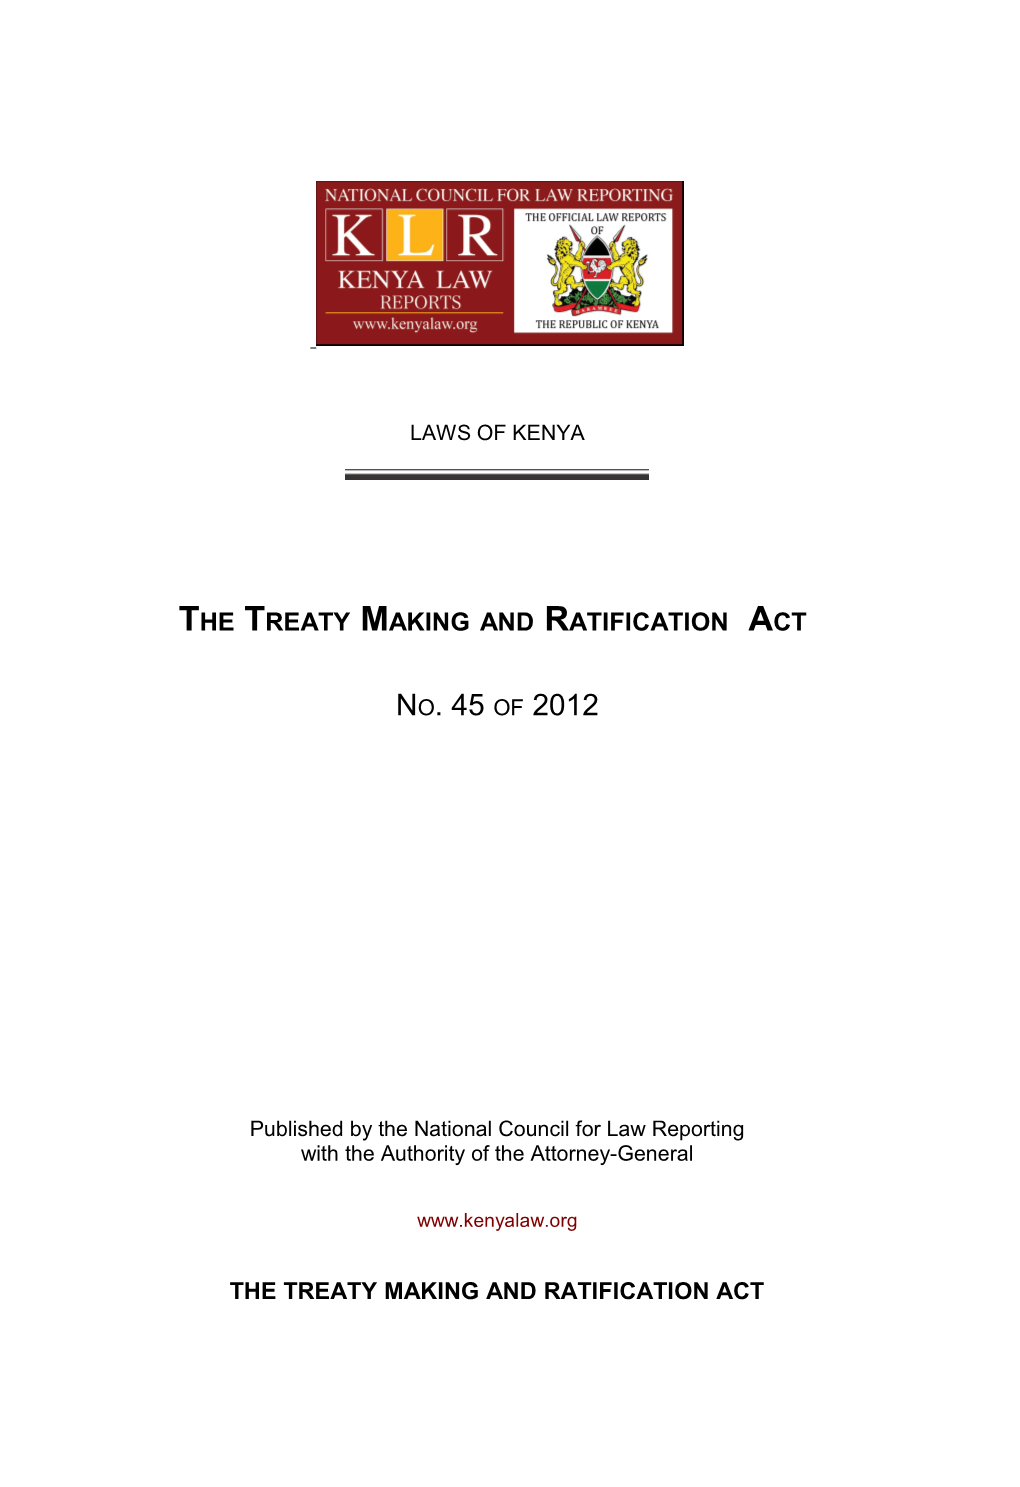 2012 Treaty Making and Ratification No. 45